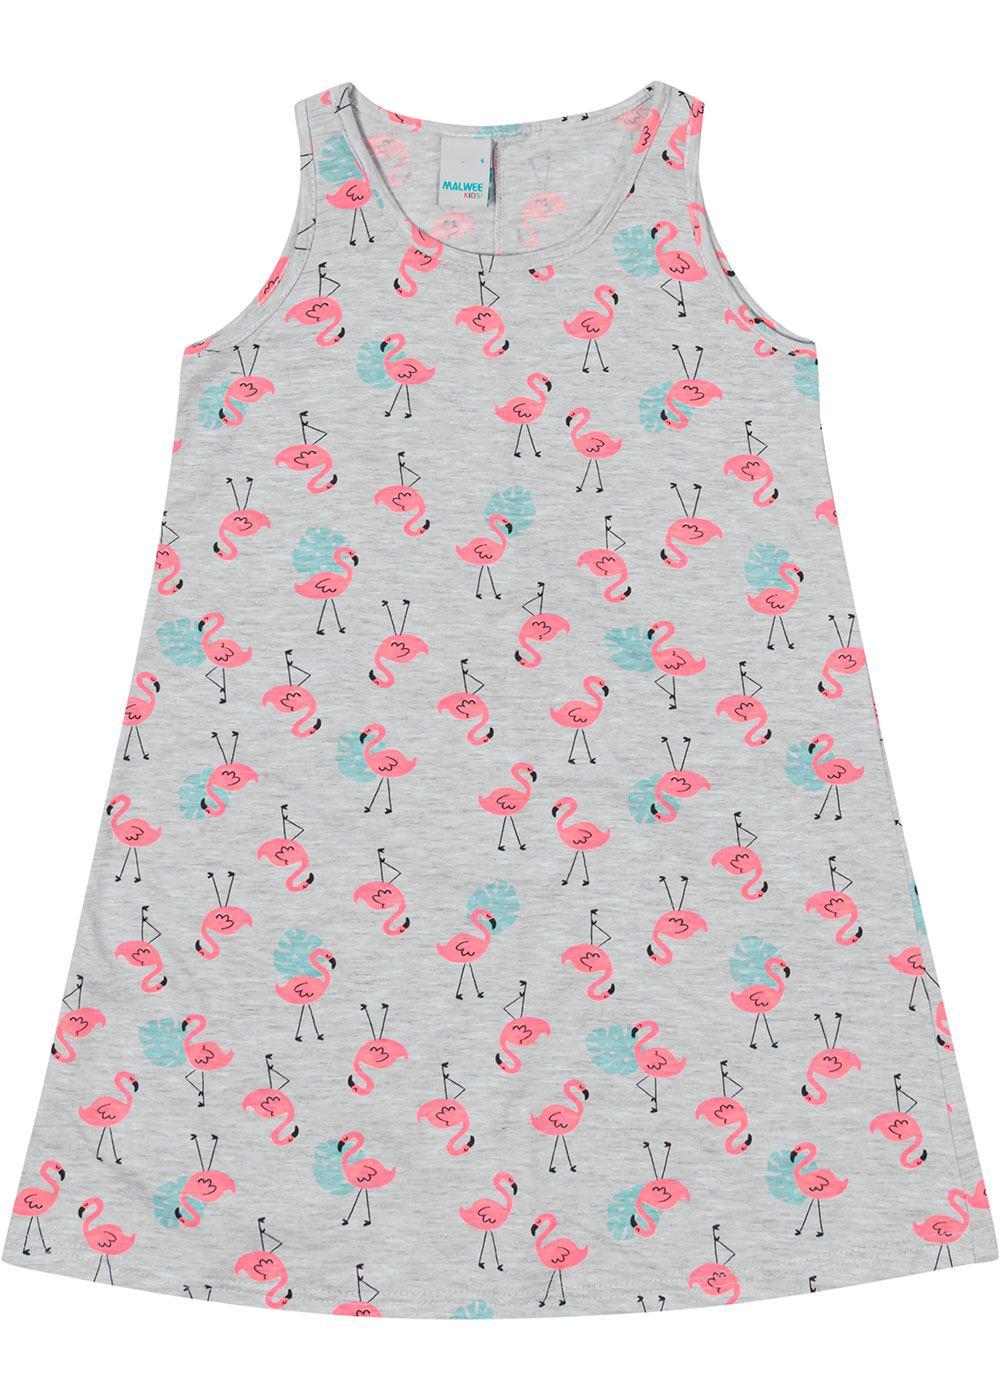 Camisola Infantil Mãe e Filha Flamingos Cinza - Malwee